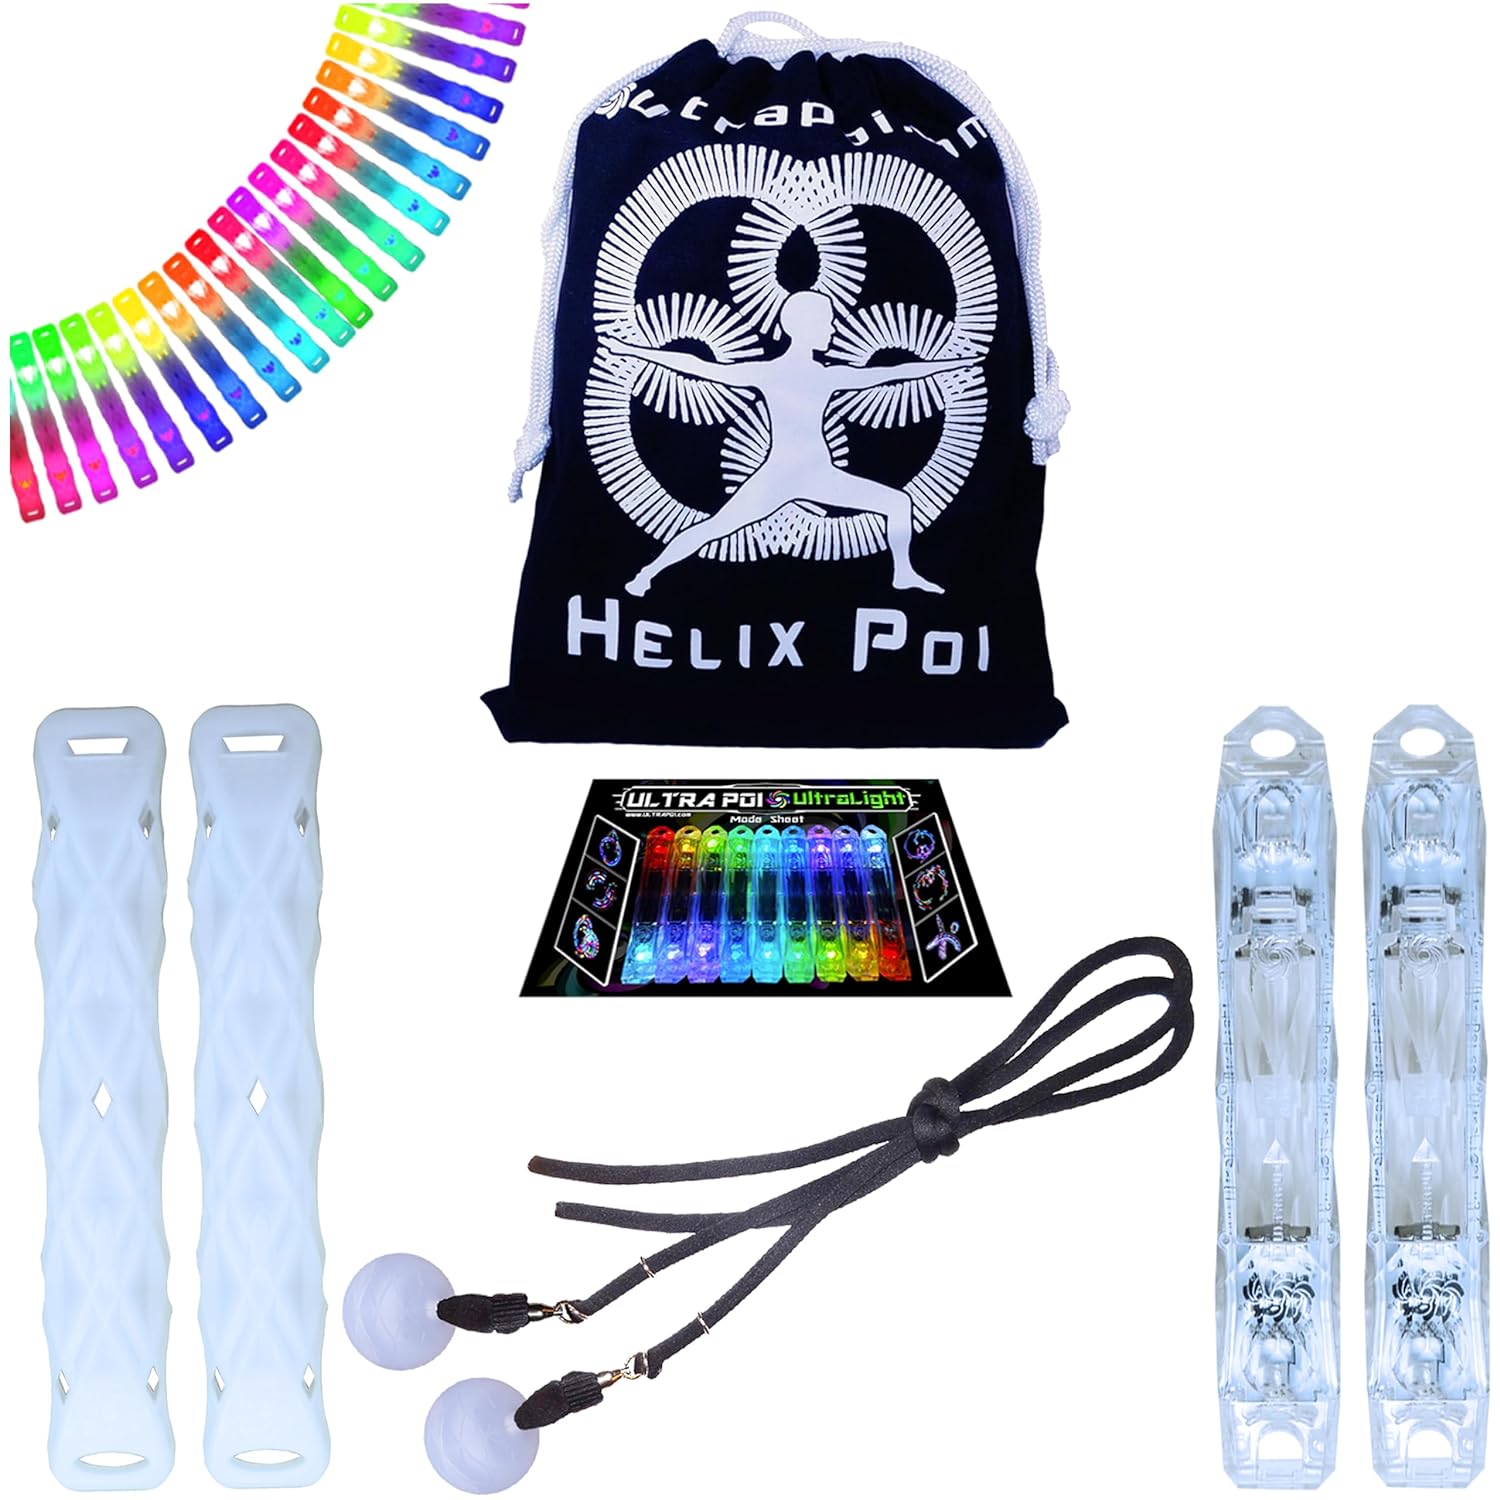 Great Choice Products Helixpoi Set - Helix Poi W/Non Led Knob Handles - 70+ Brilliant Color Modes & Patterns - Led Poi Glow Stick Lights W/Soft 